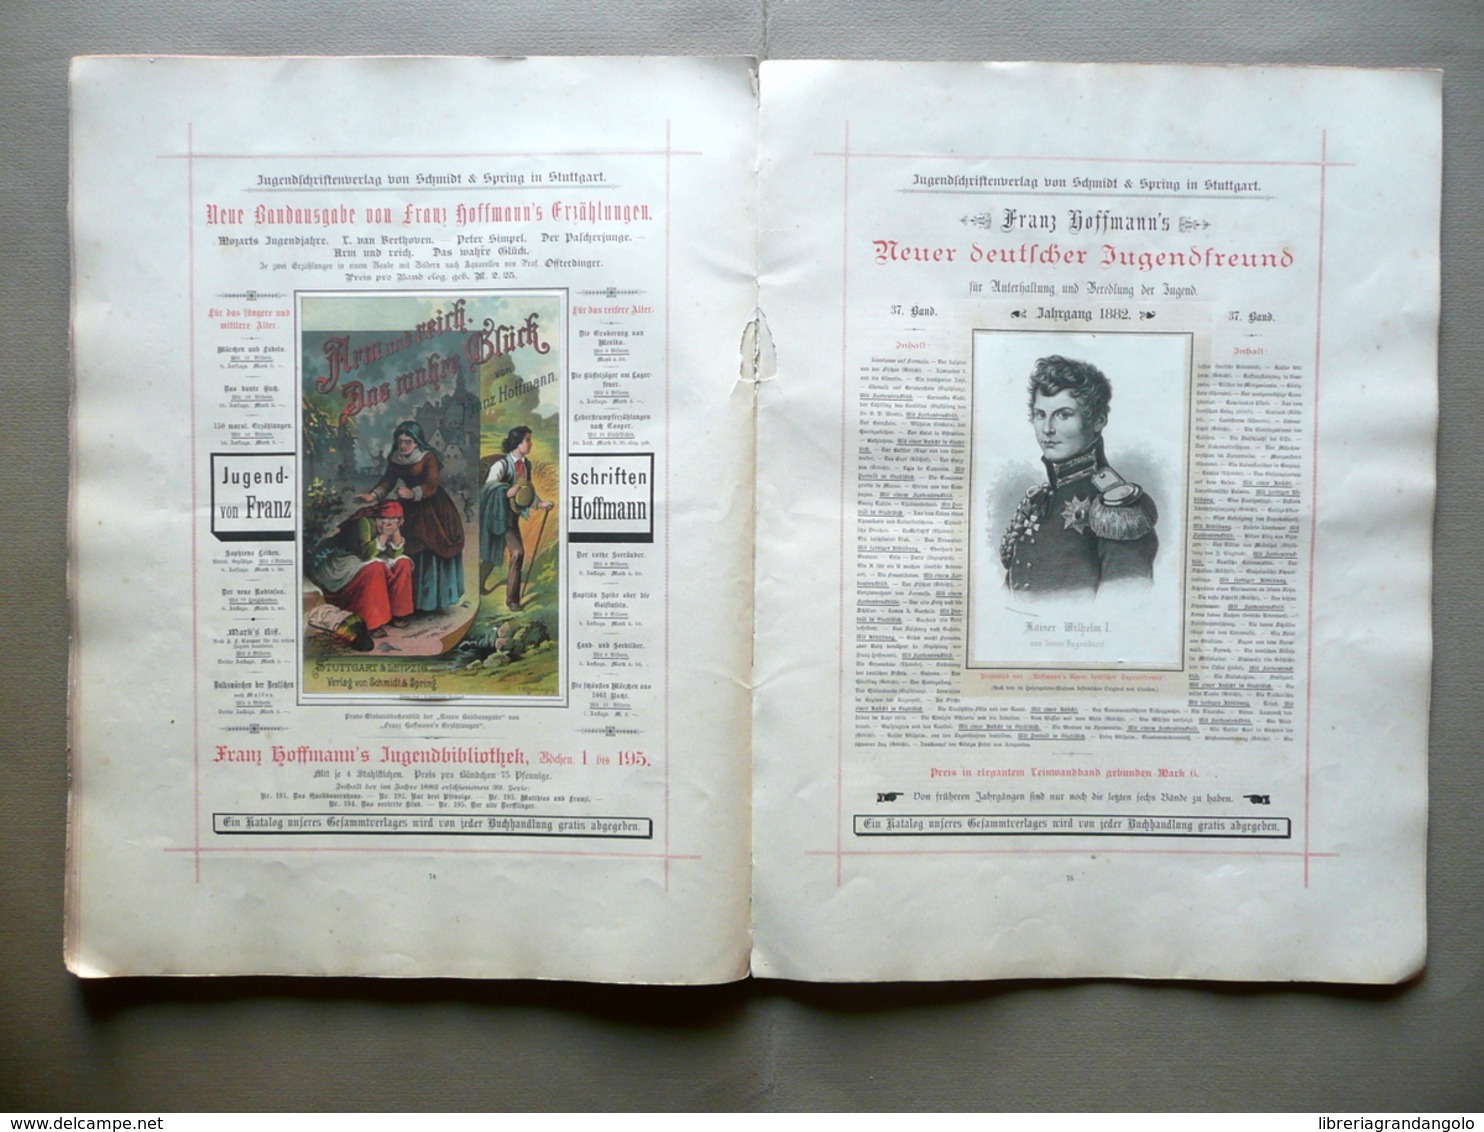 Festgaben aus dem Stuttgarter Verlag Stuttgart 1882 Catalogo Editoriale